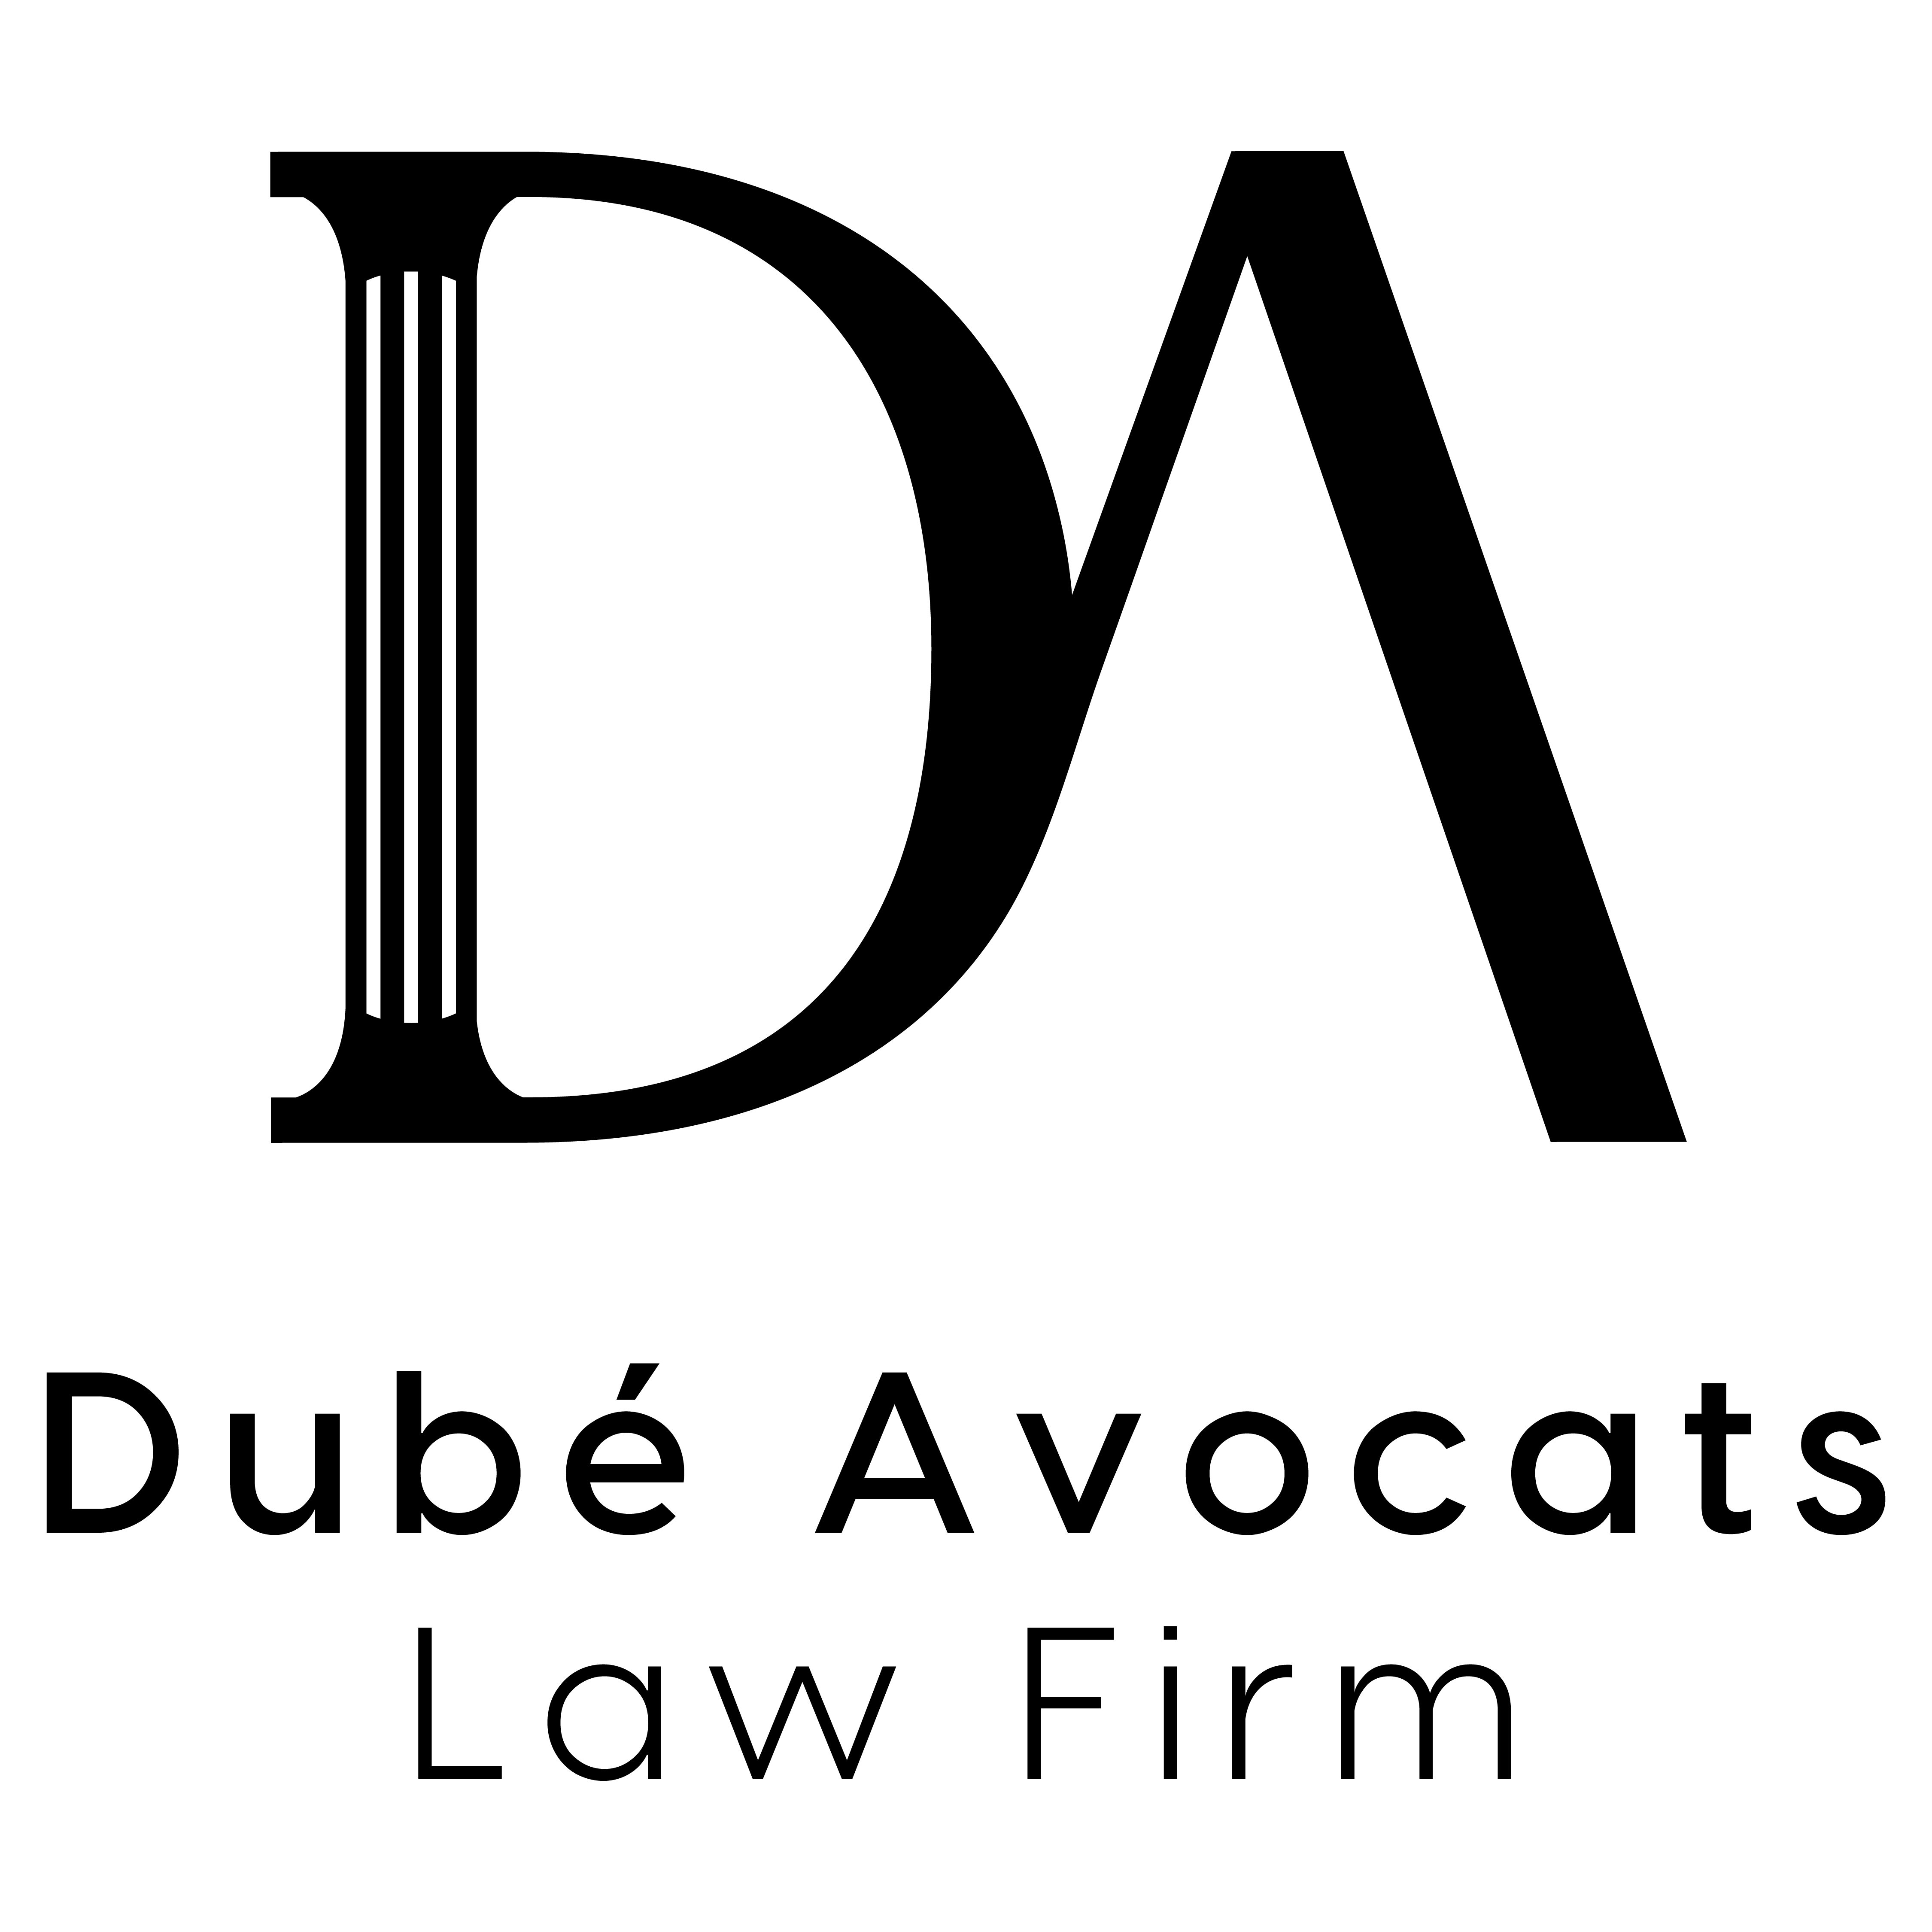 Dubé Avocats LawFirm